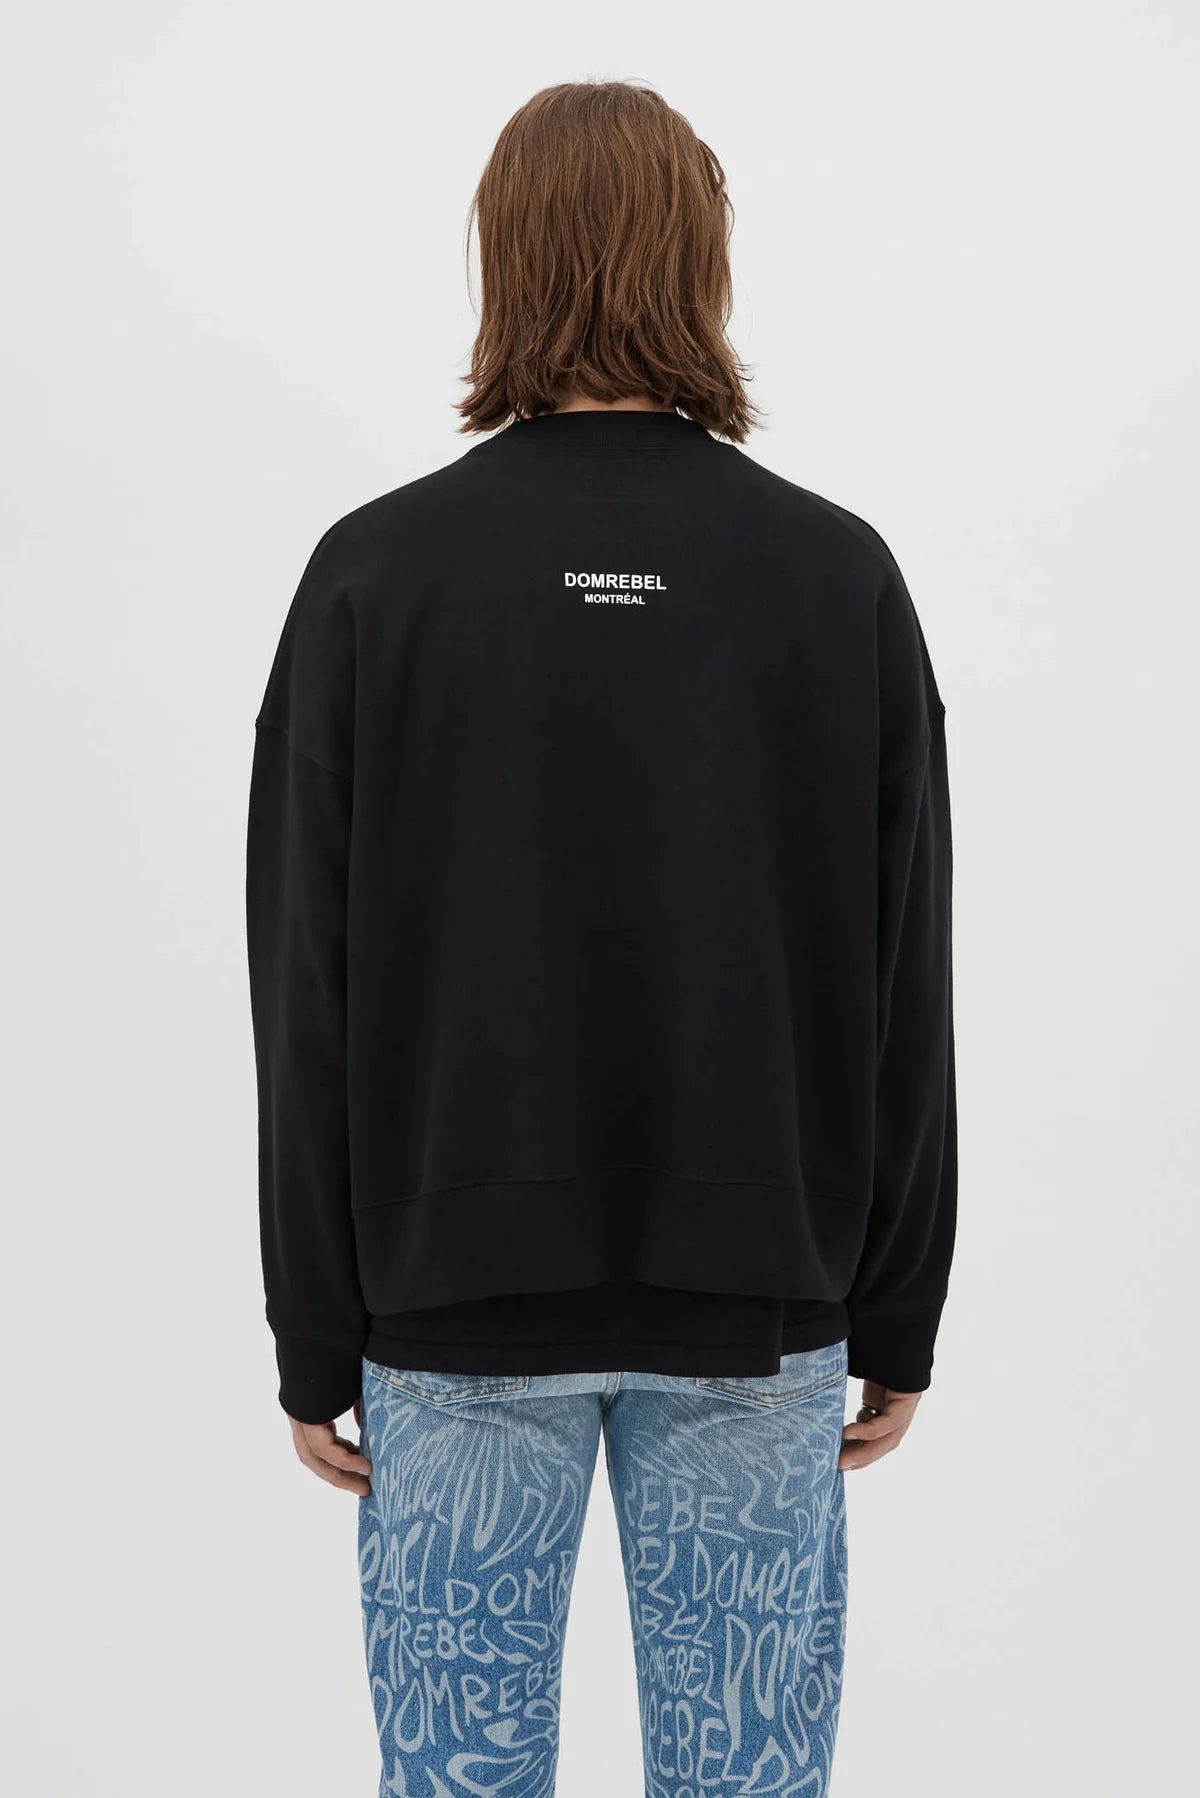 Snap Cropped Sweatshirt Black